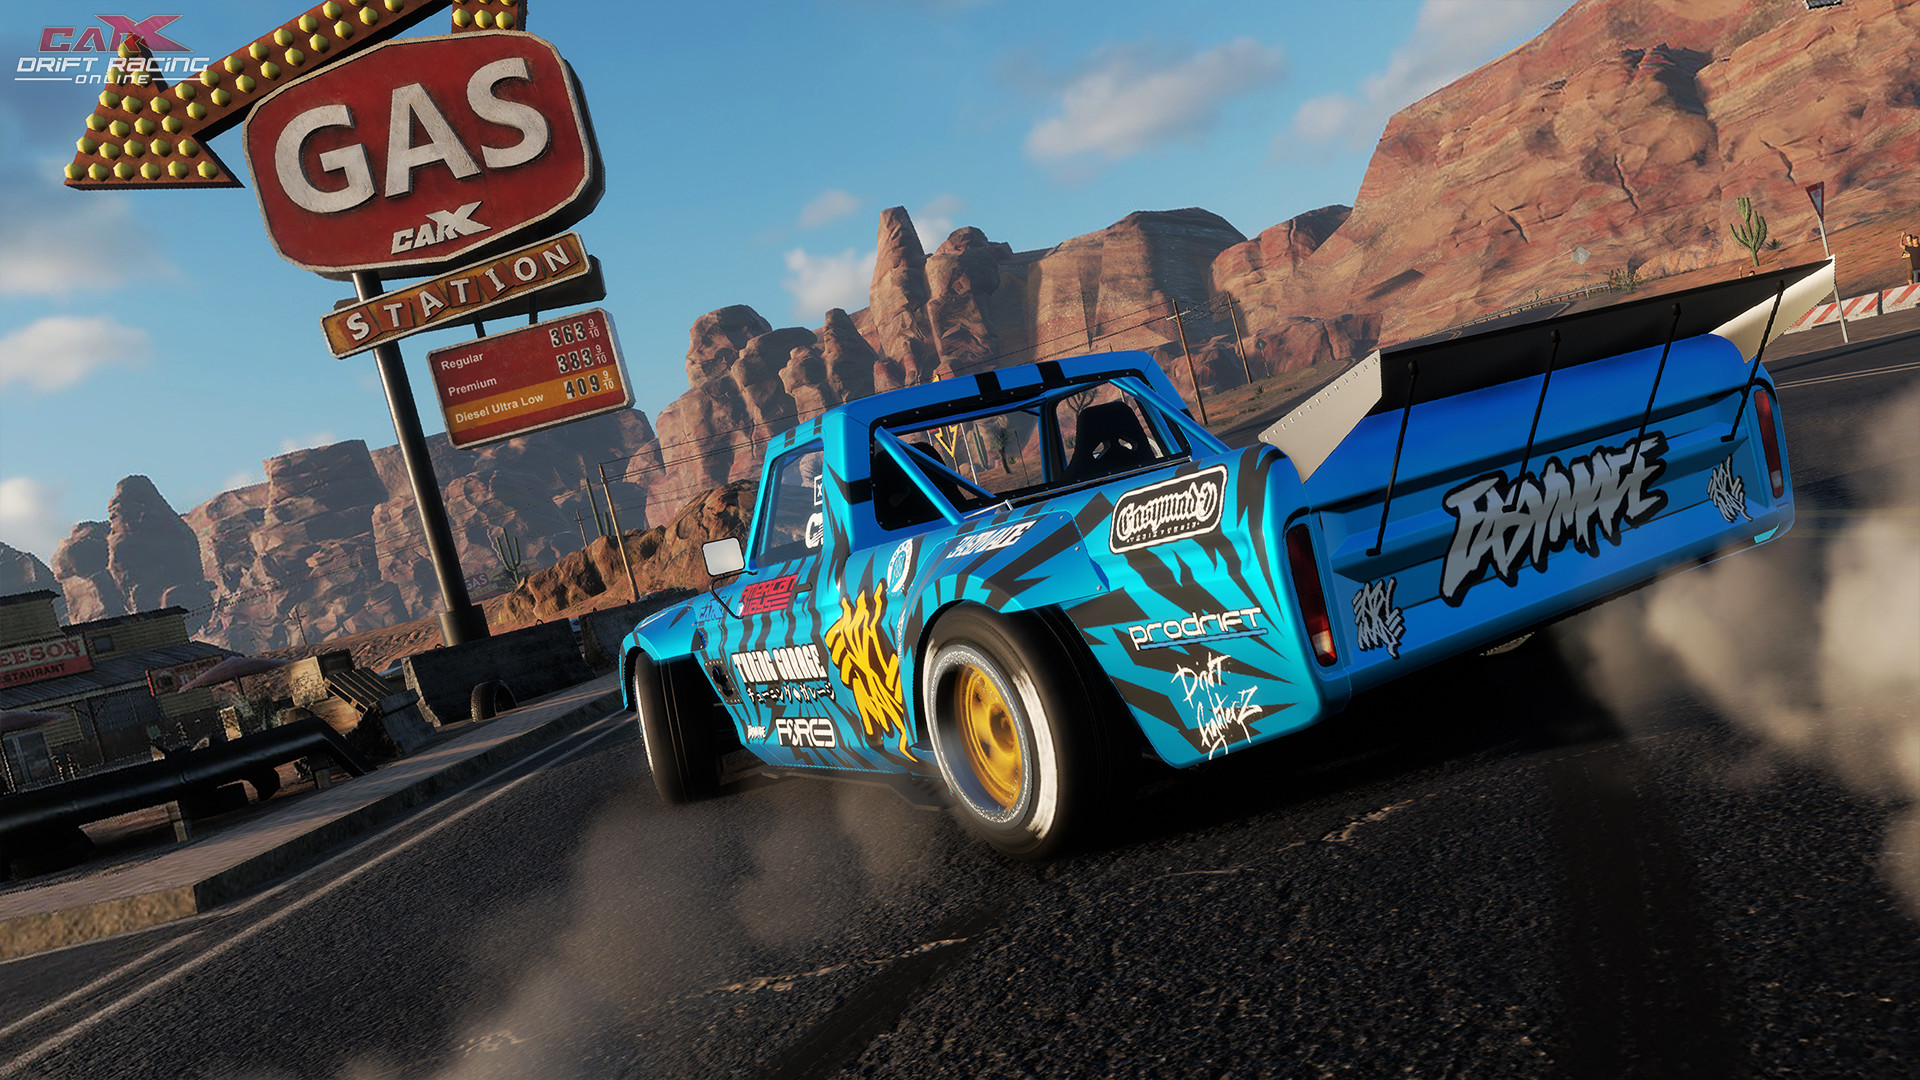 Download CarX Drift Racing Online PC Game Free